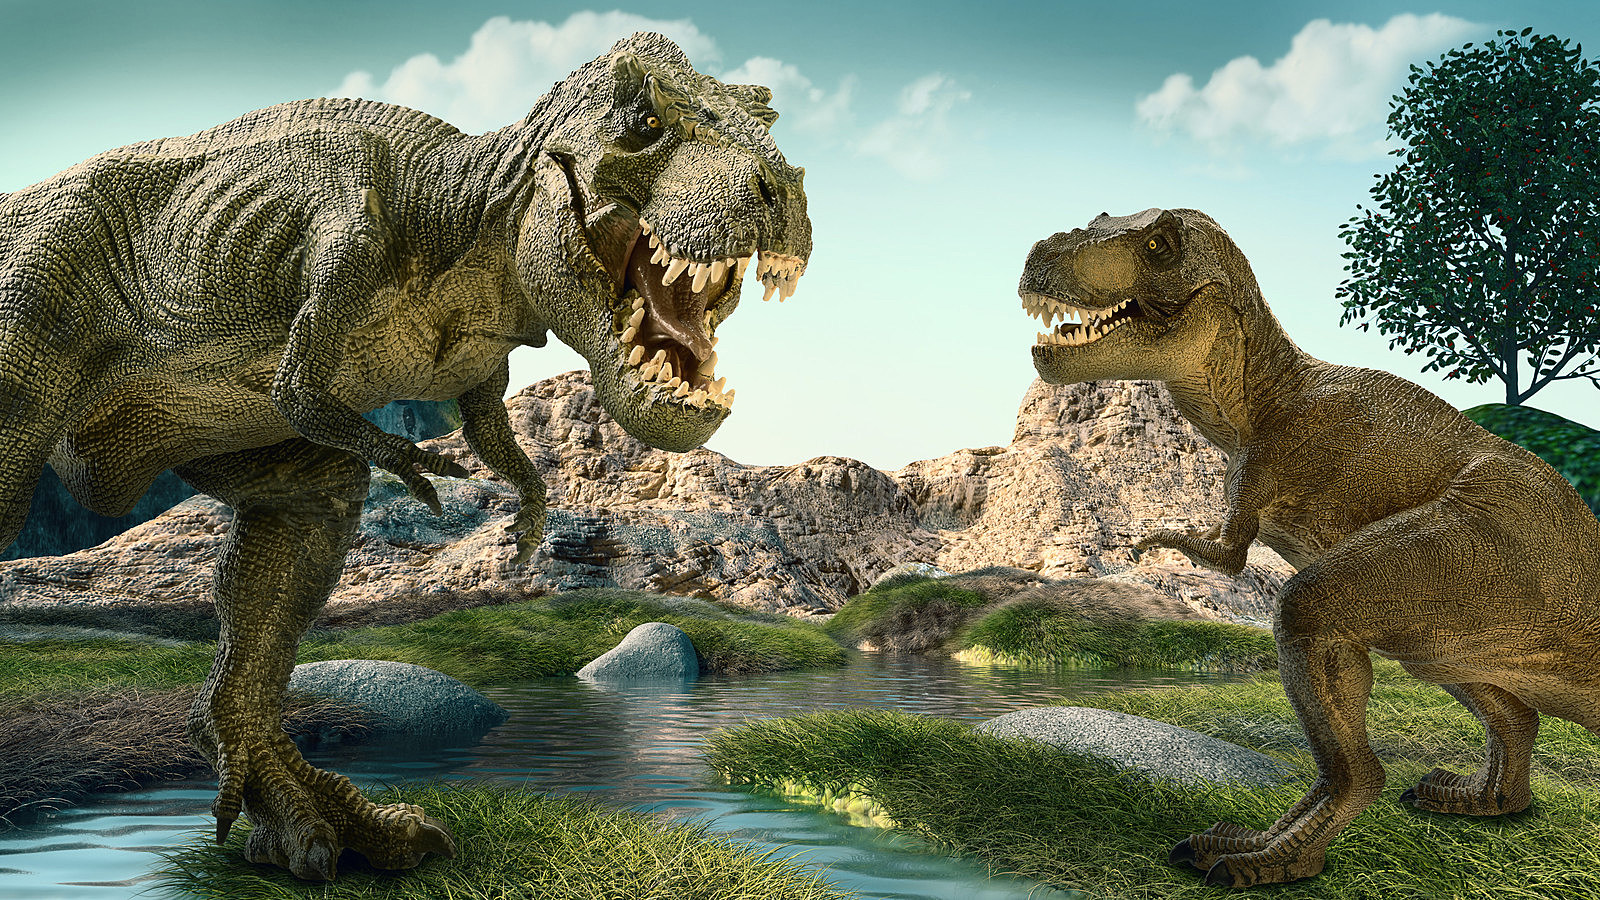 Goliath Dig 'Em Up Dinos - Fossil-Finding, Dino-Building Game